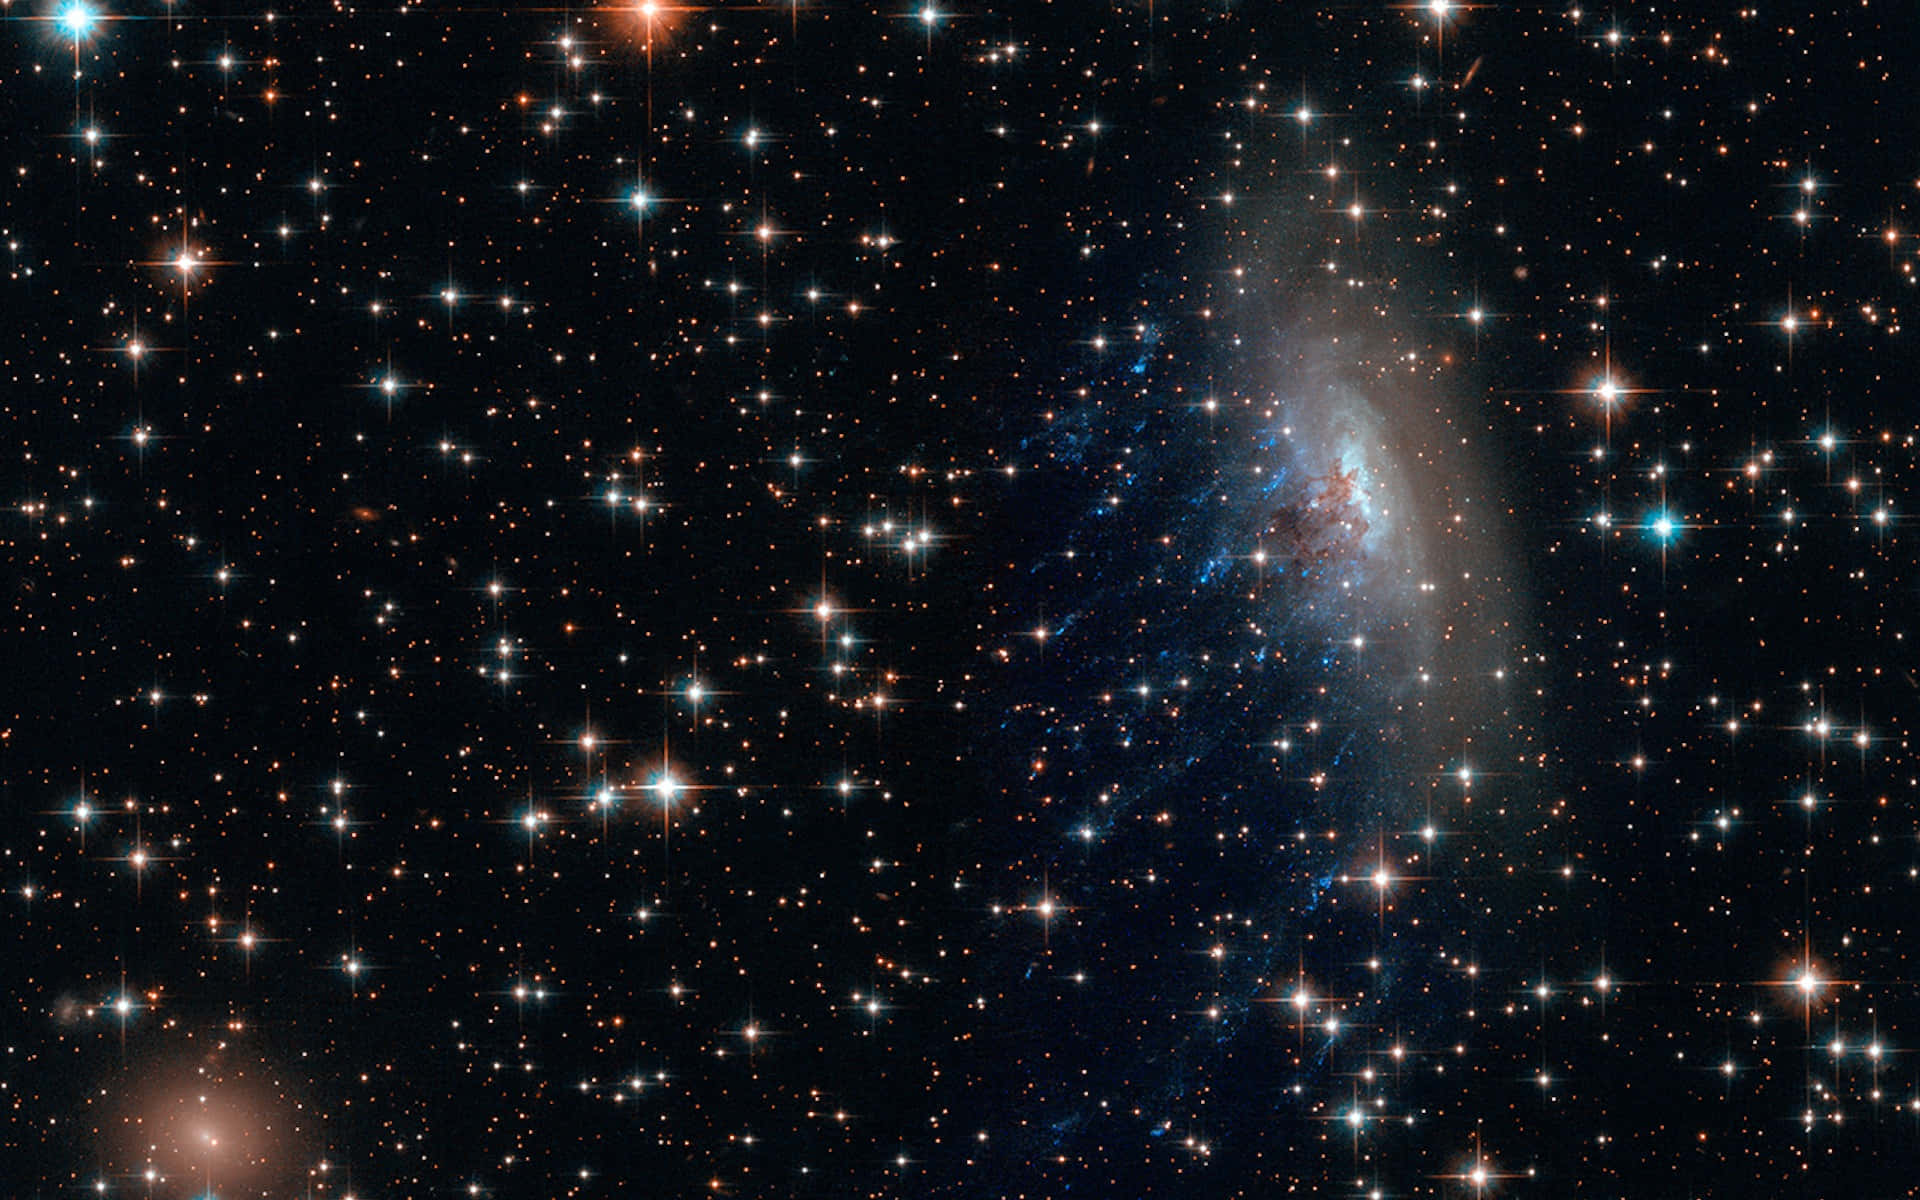 Galakserum Baggrund ESO 137-001